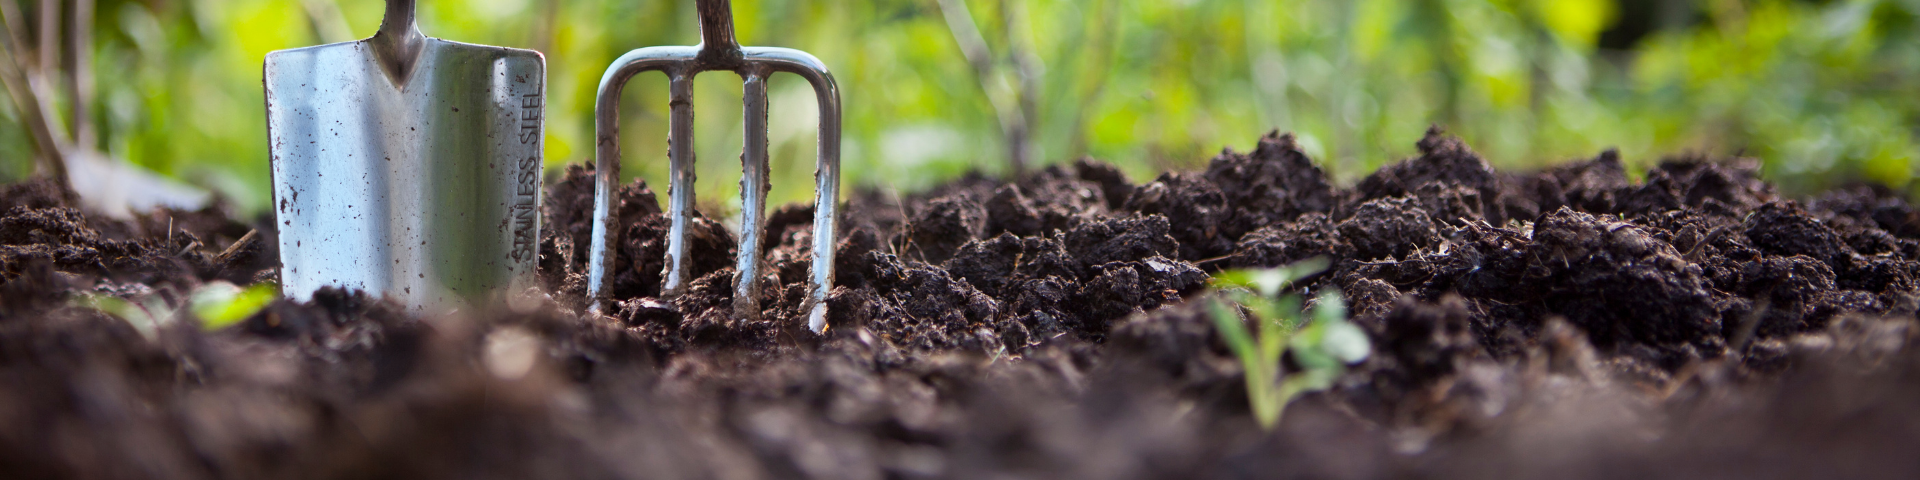 gardening tool in dirt